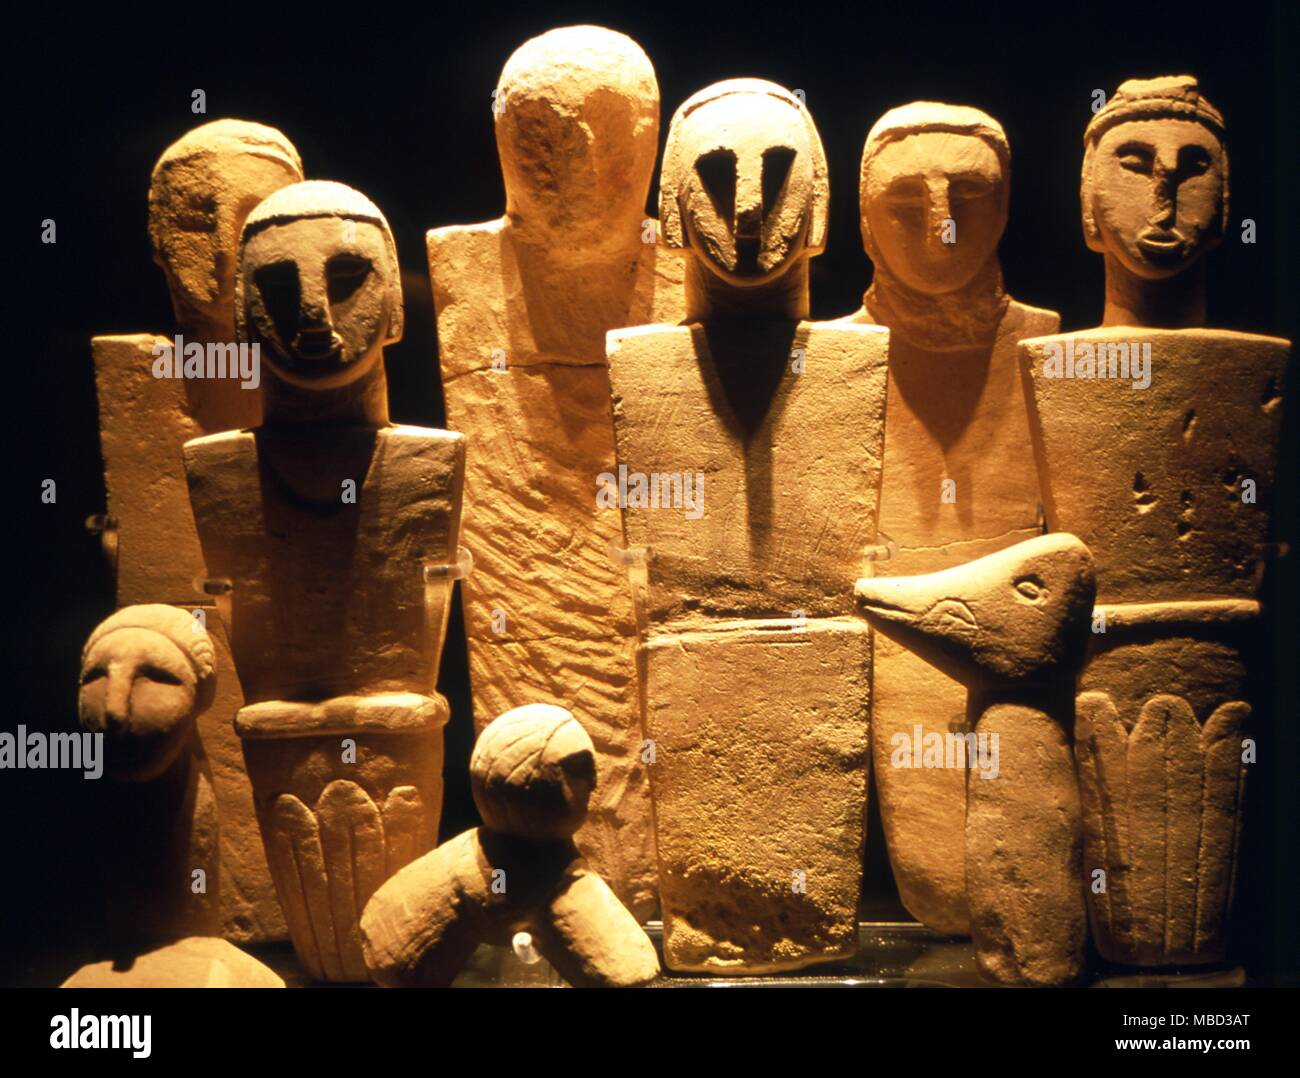 Shaman - Prehistoric Art figurines found in the Xaghra Stone Circle complex in Malta. Stock Photo